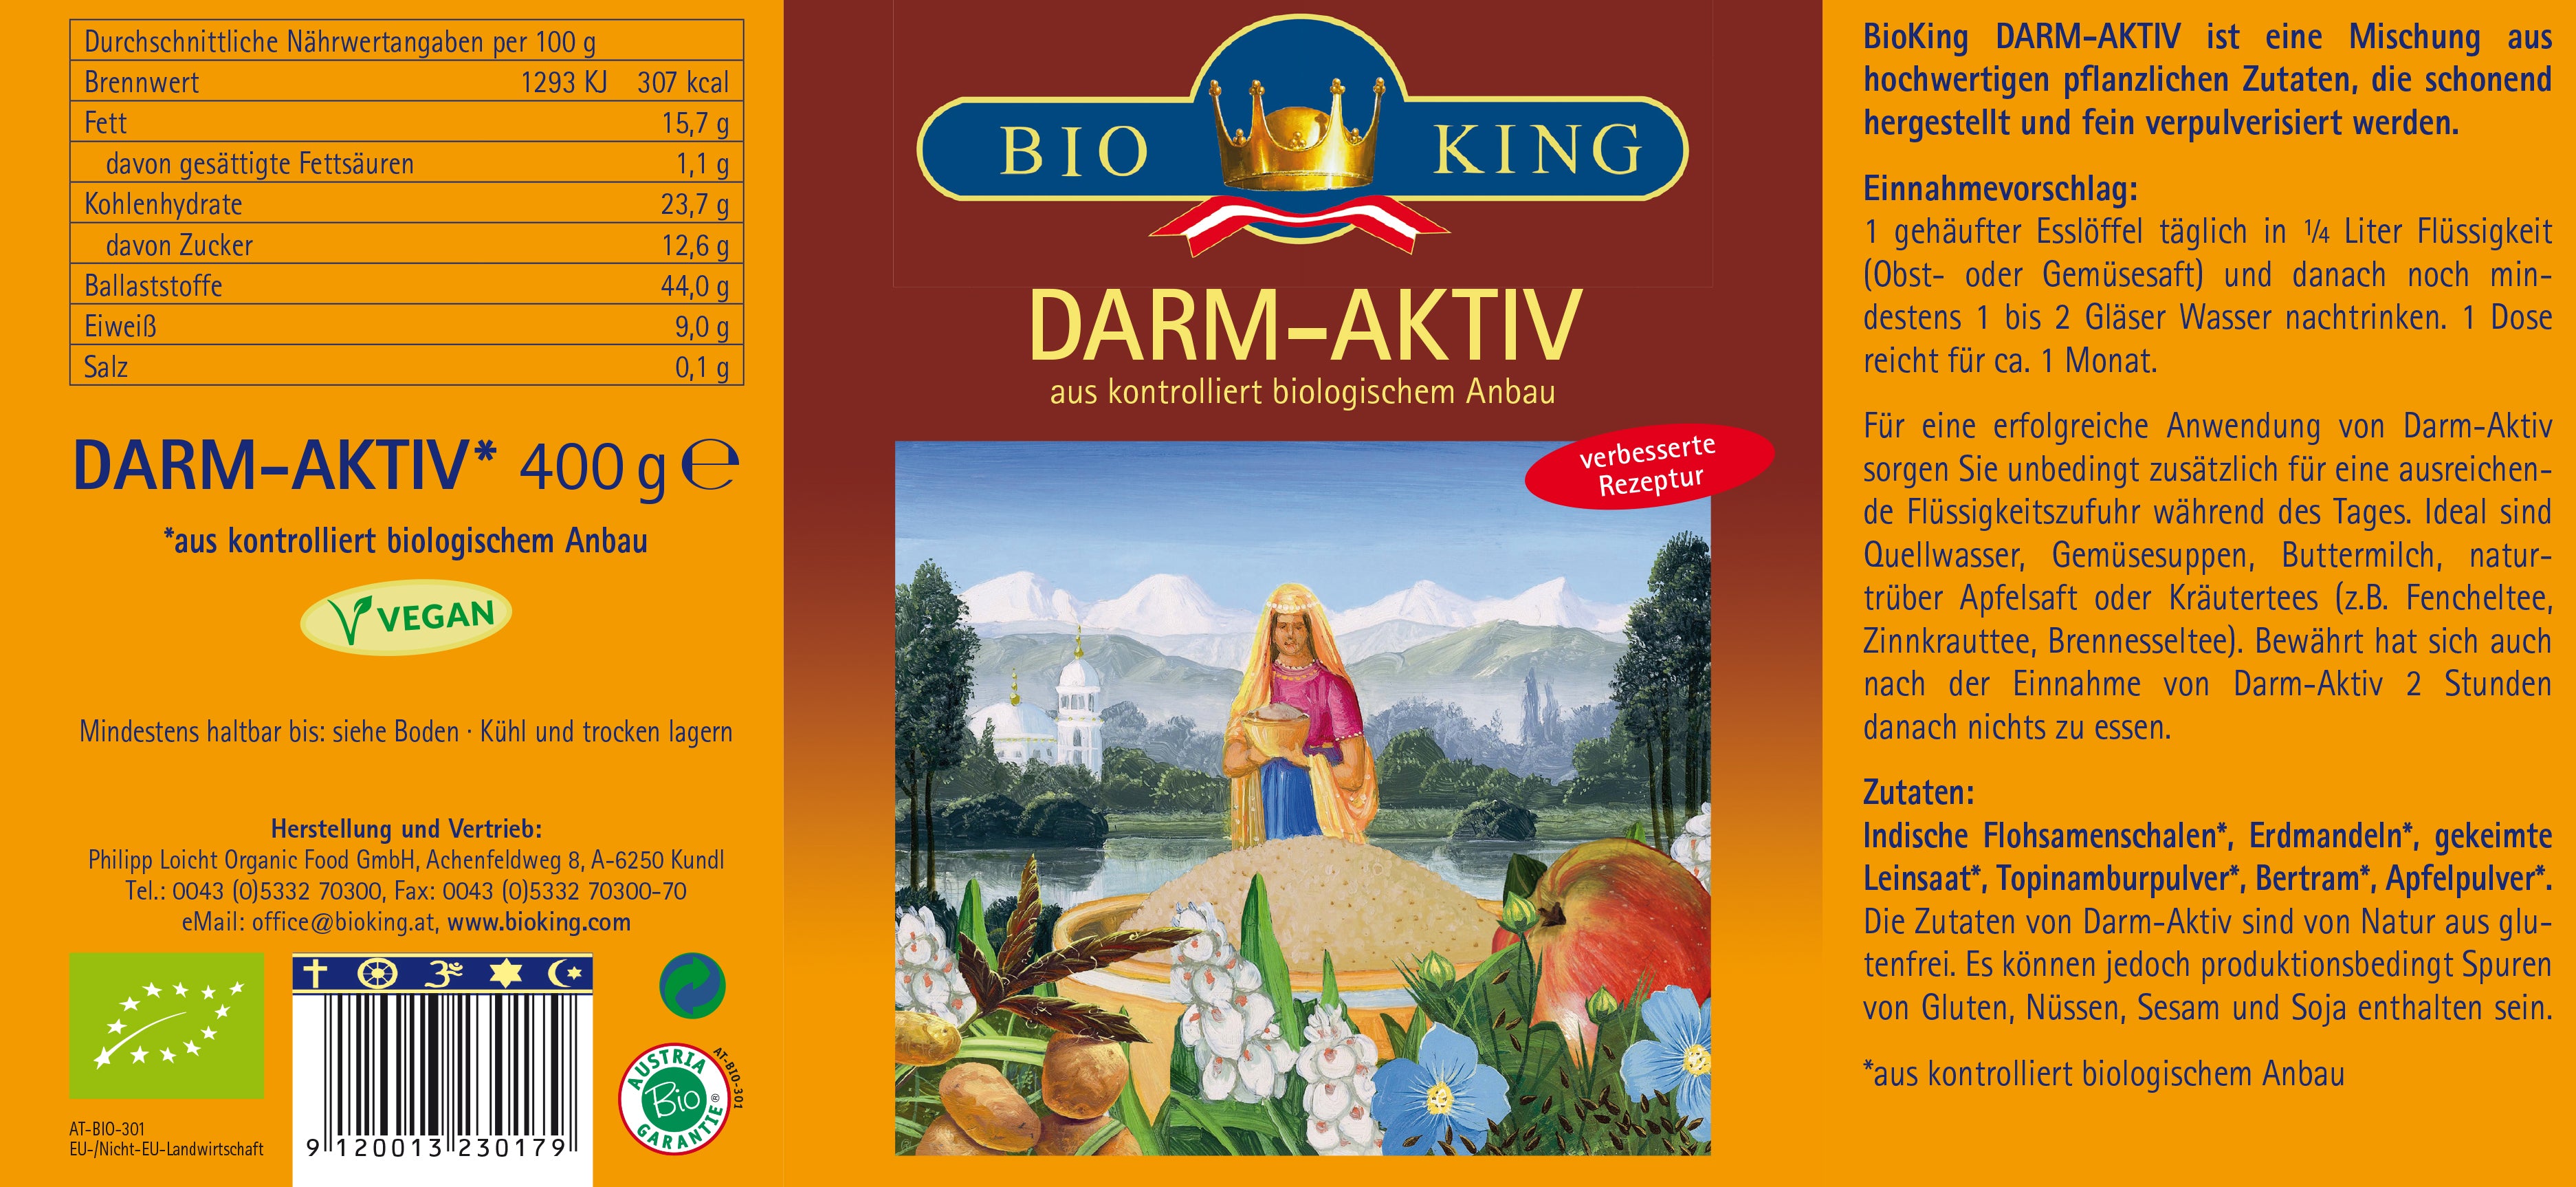 Bio DARM-AKTIV